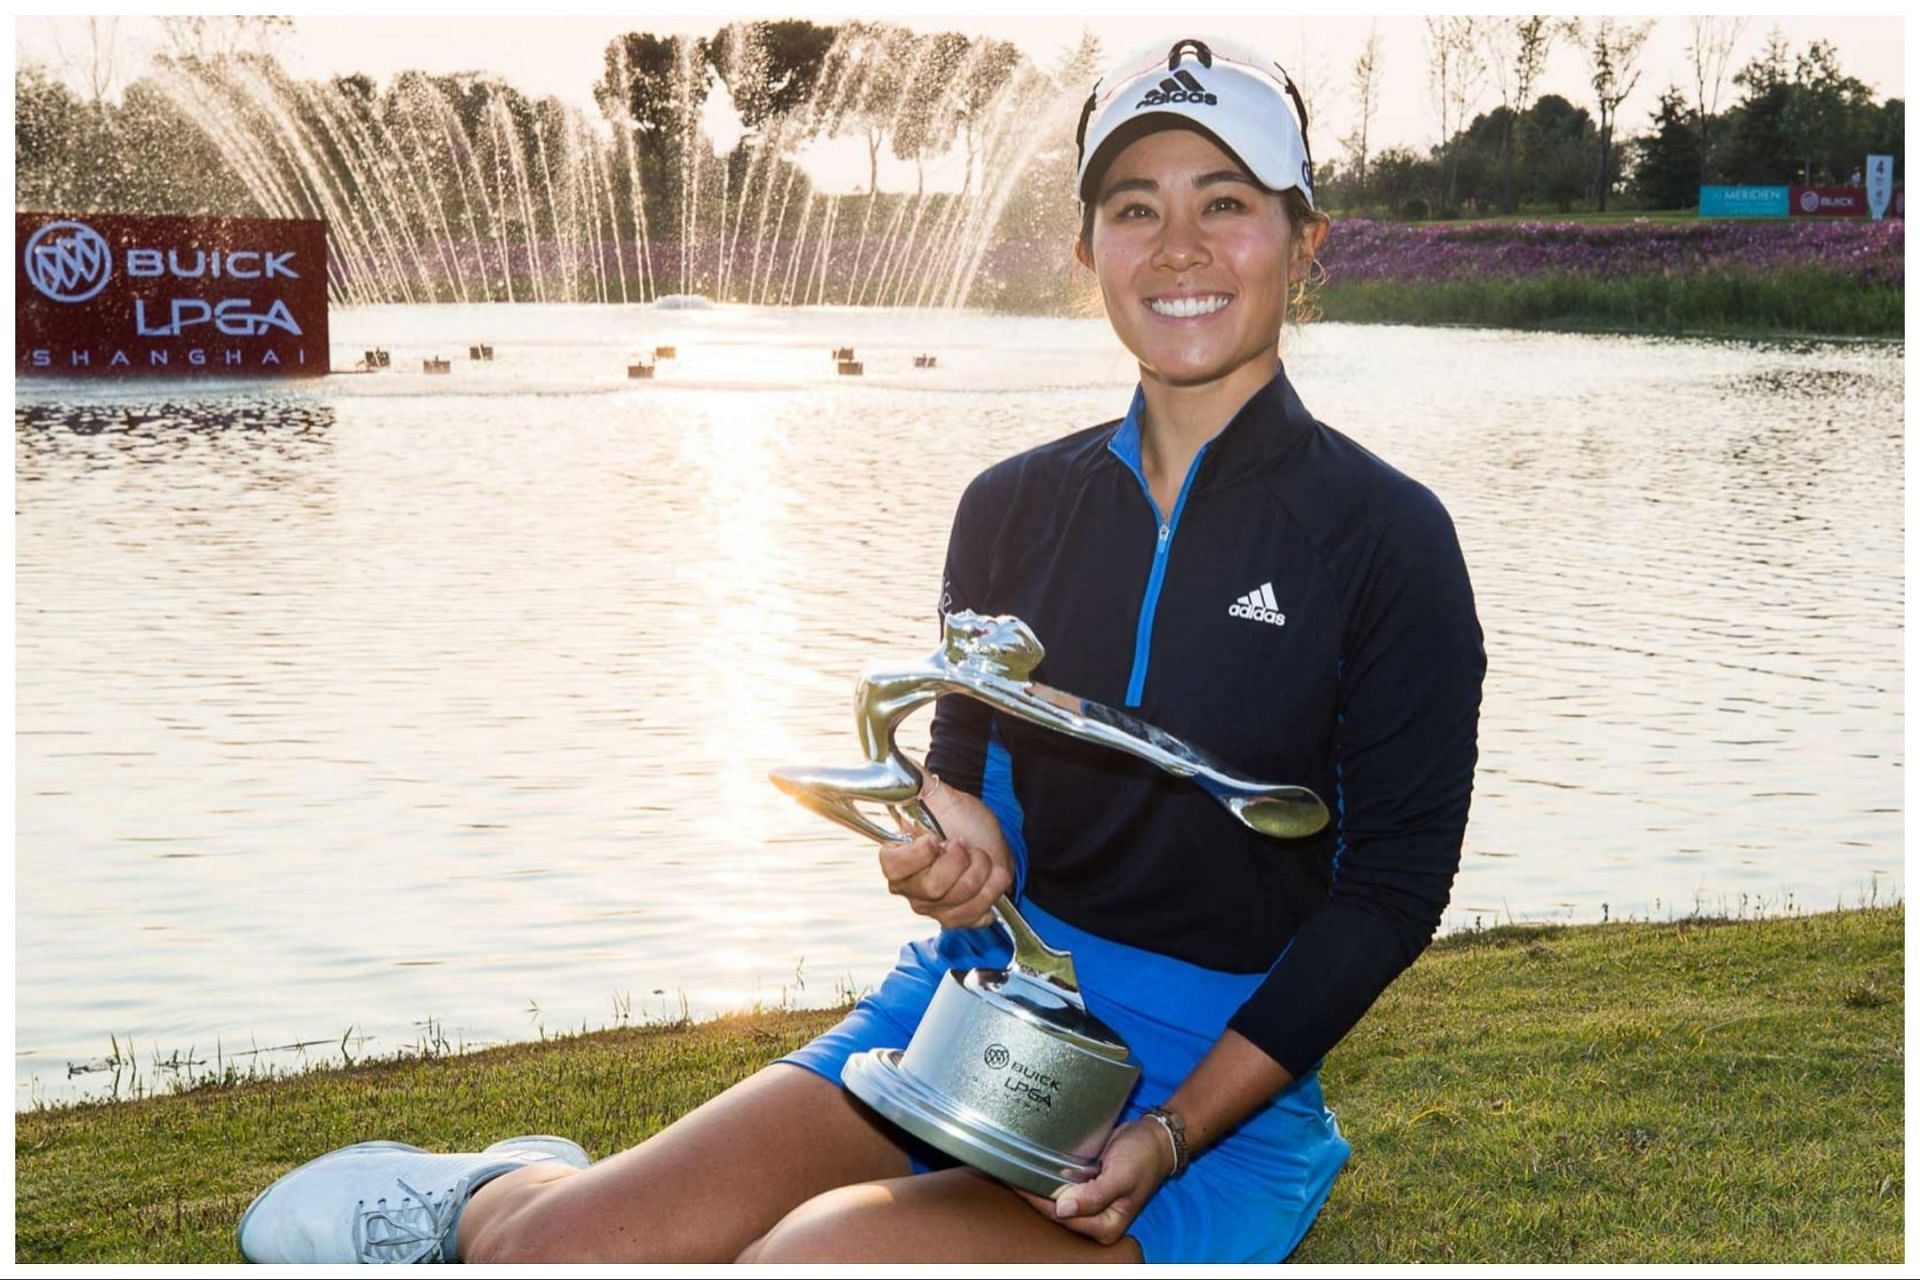 Danielle Kang is the two time defending champion at the Buick LPGA Shanghai (Image via LPGA Tour)